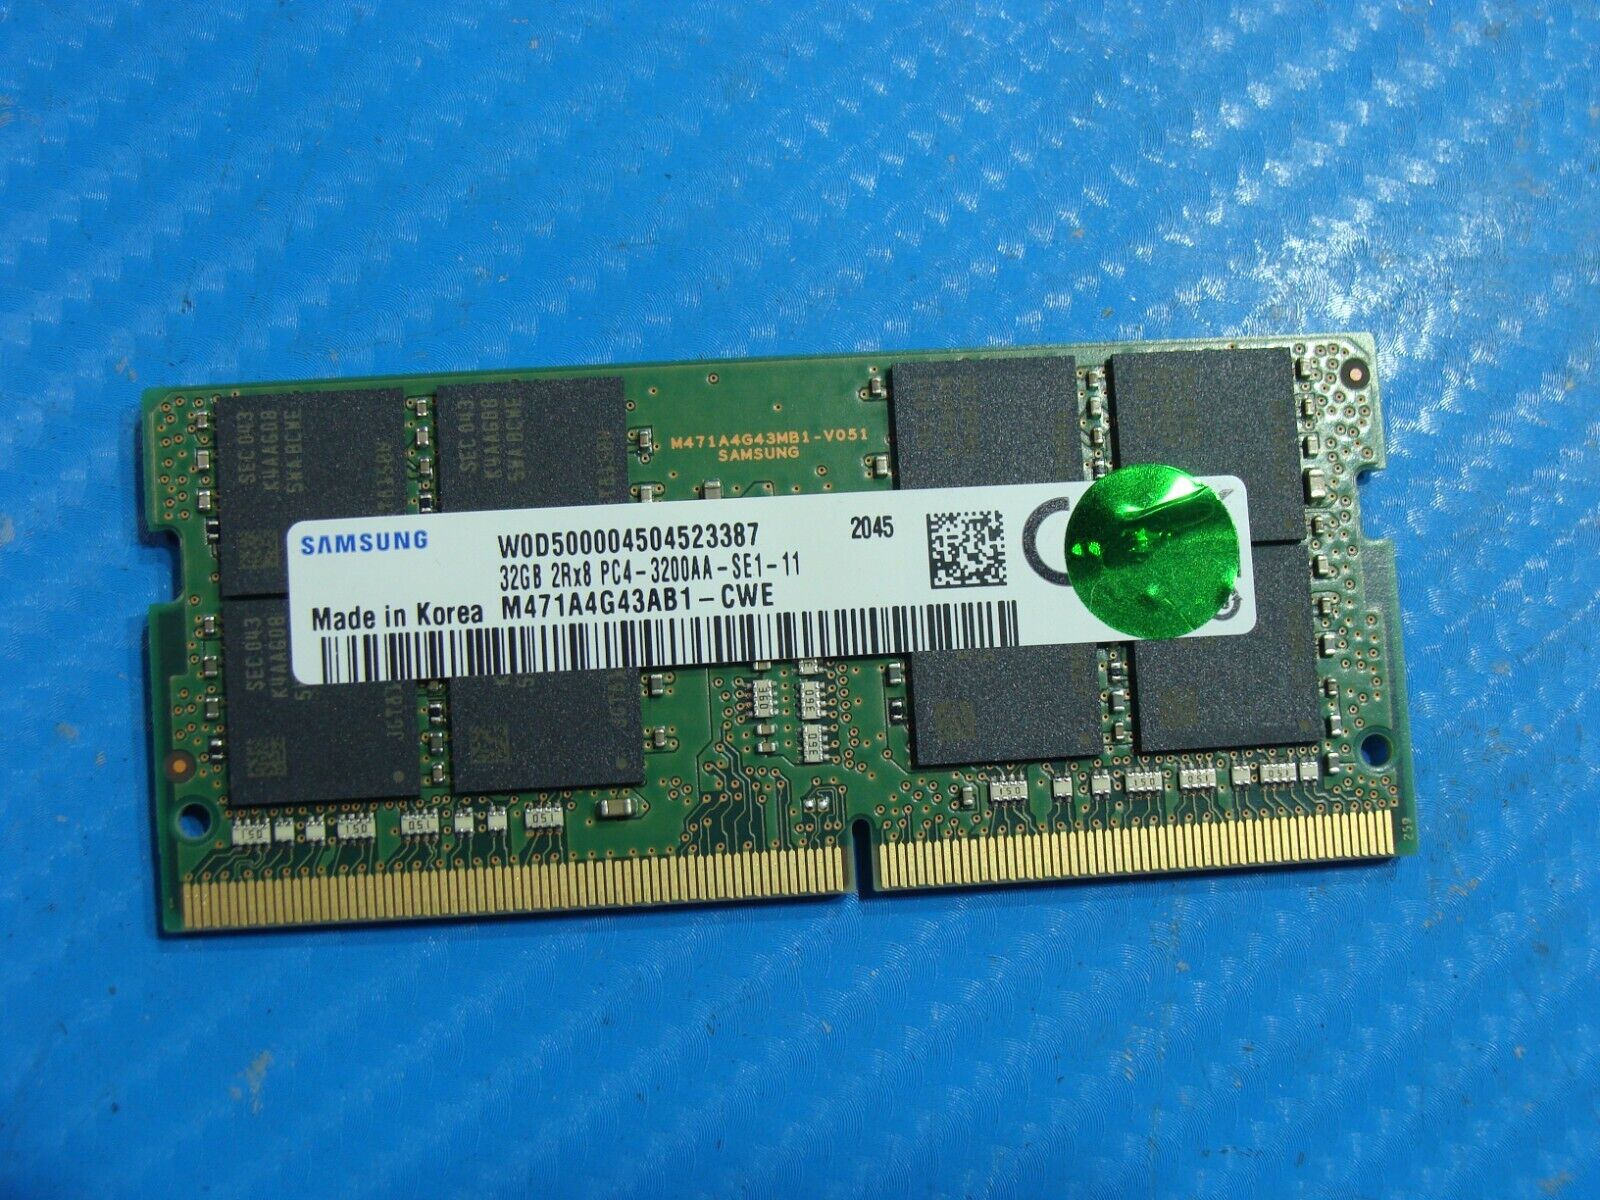 Dell 5411 Samsung 32GB 2Rx8 PC4-3200AA SODIMM Memory Ram M471A4G43AB1-CWE